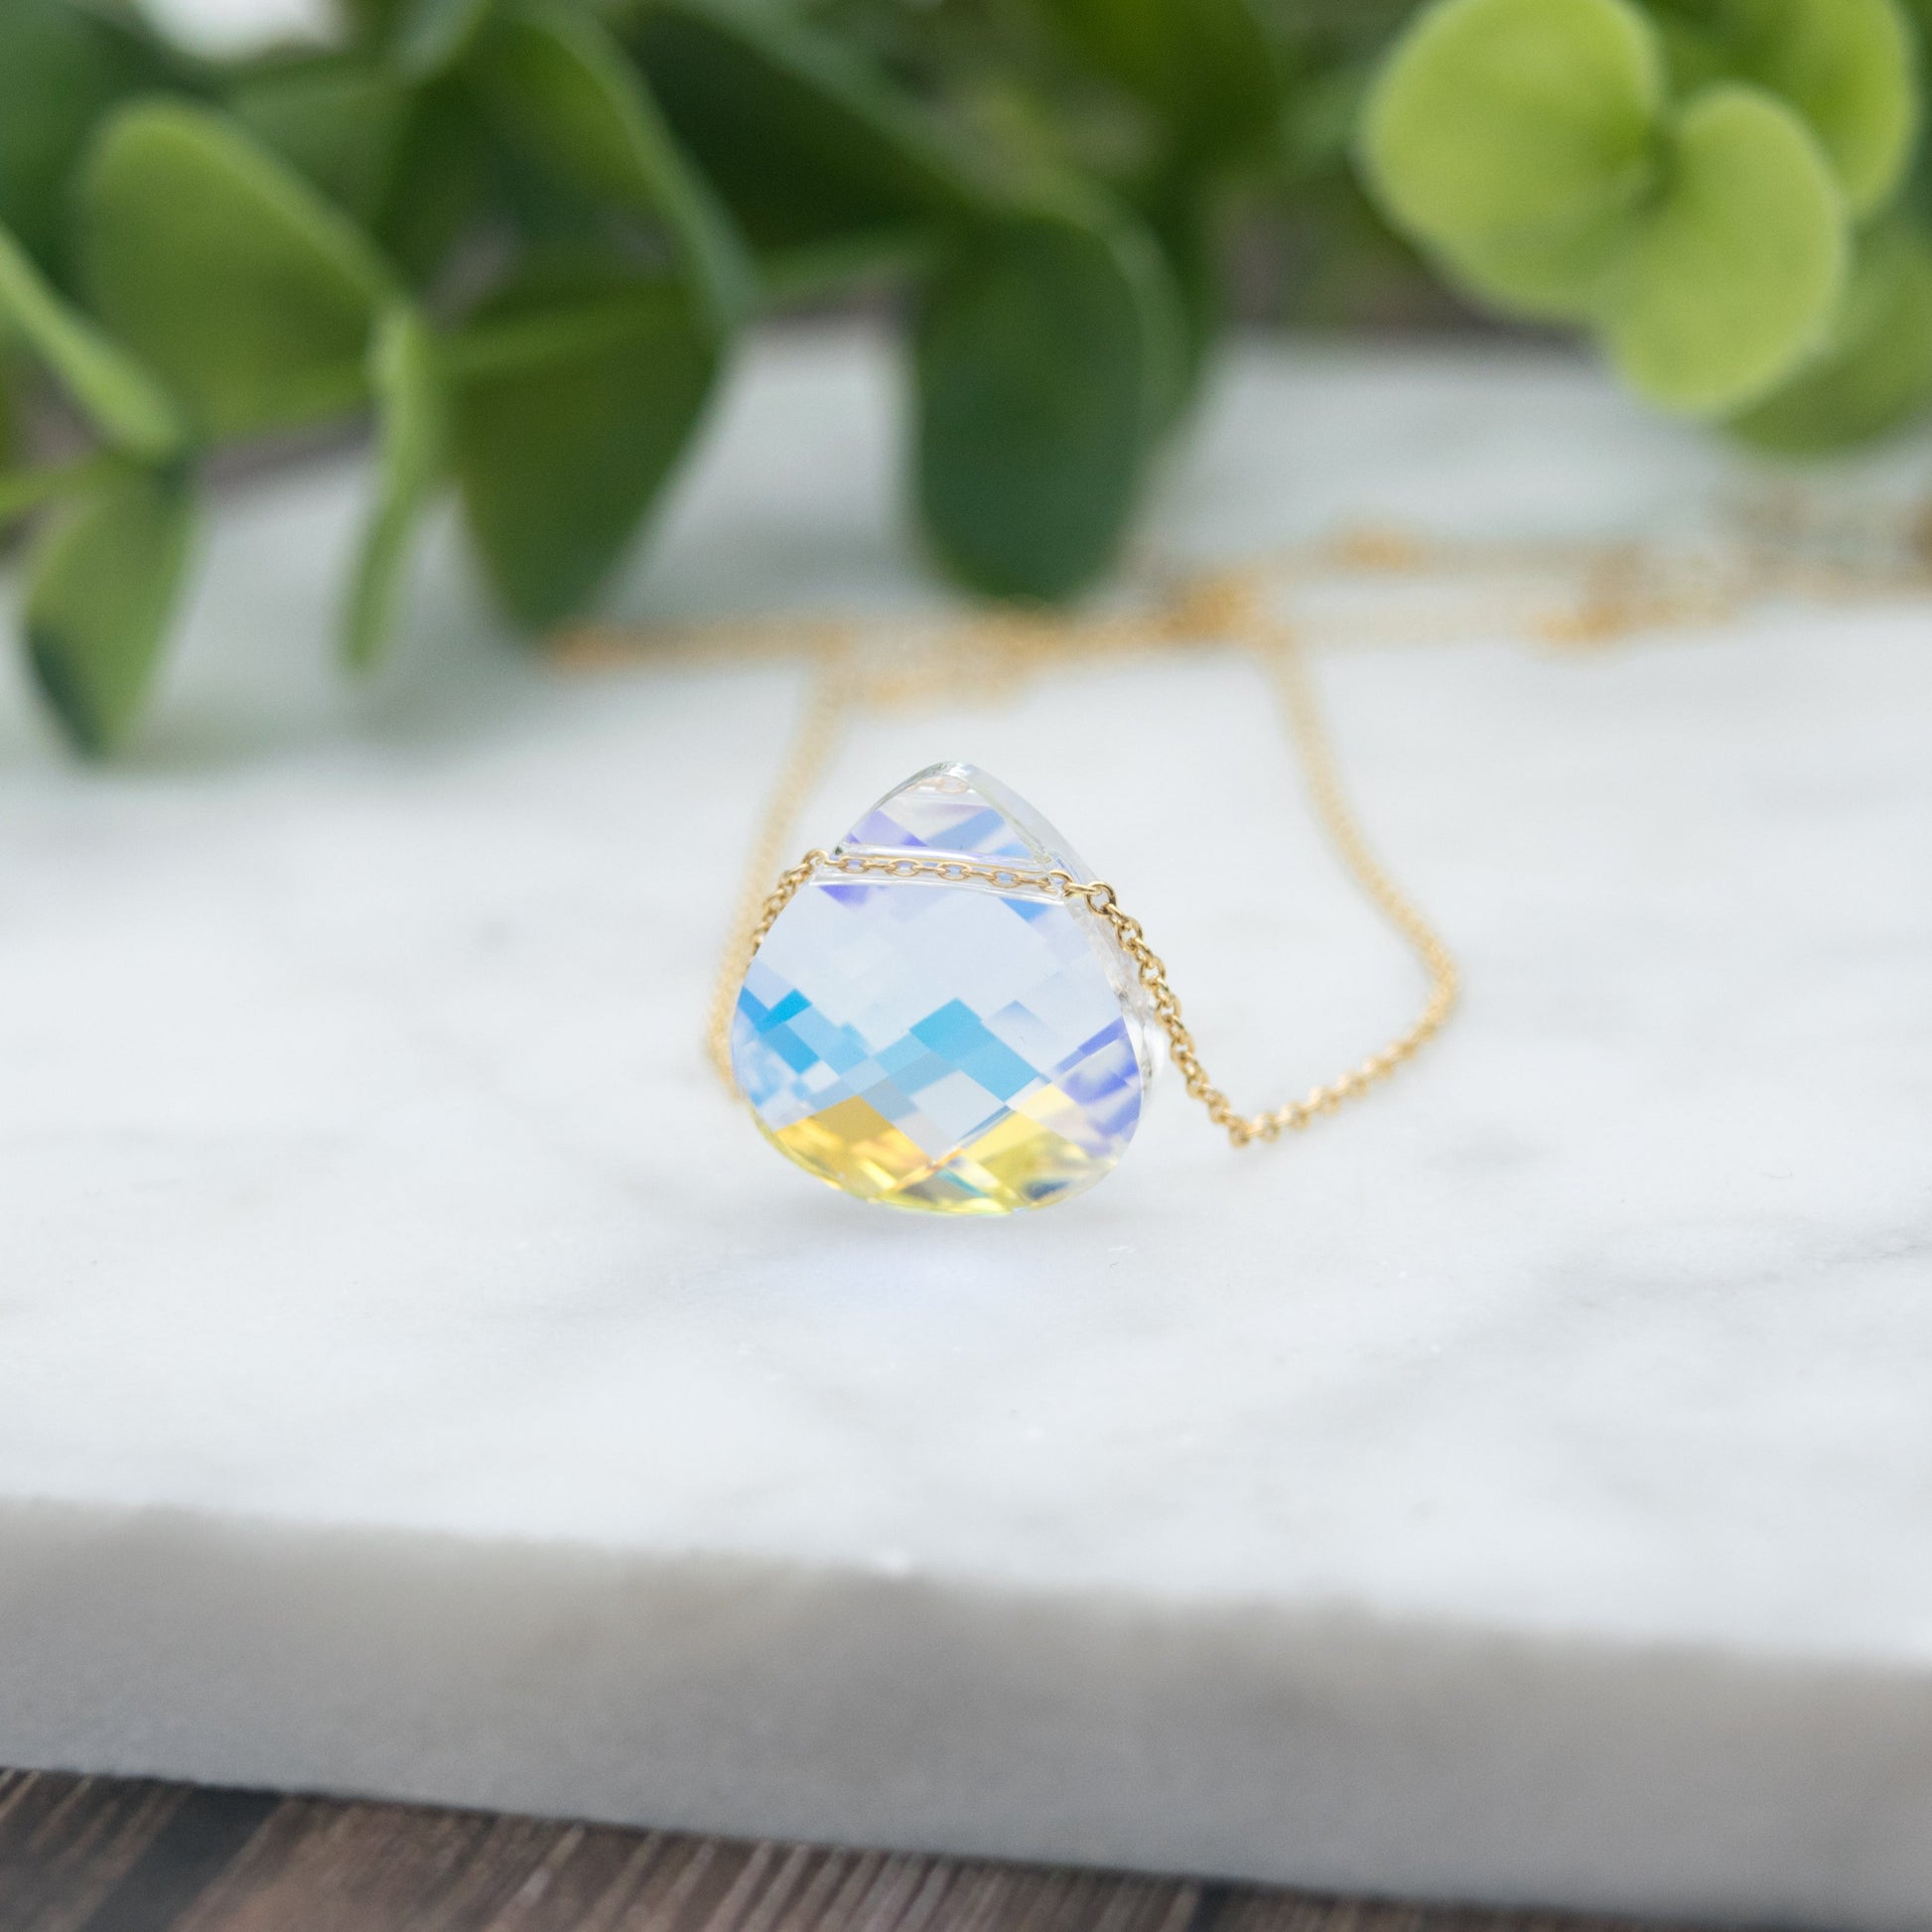 Ashley Swarovski rainbow crystal pendant necklace in 14k gold-fill